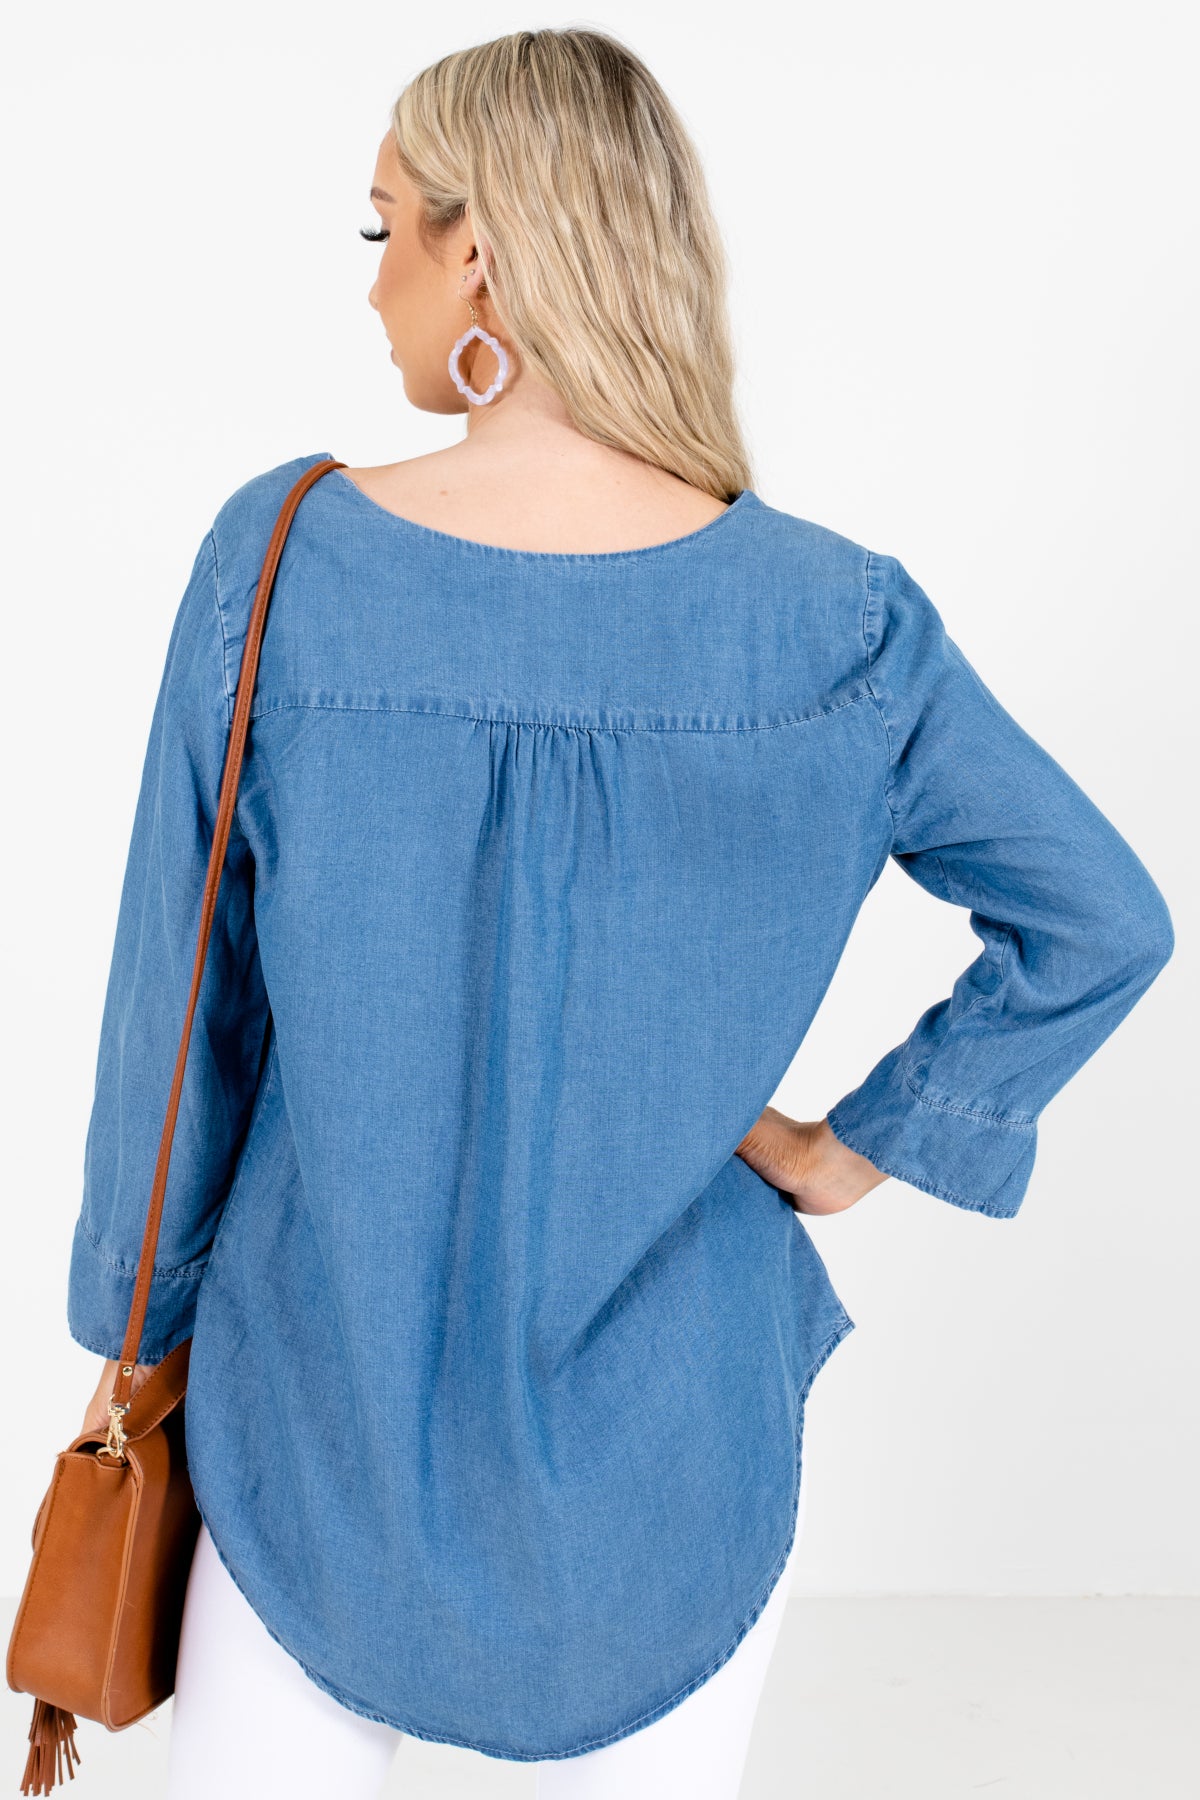 Women's Blue Front Pocket Boutique Blouse, business casual tops for women